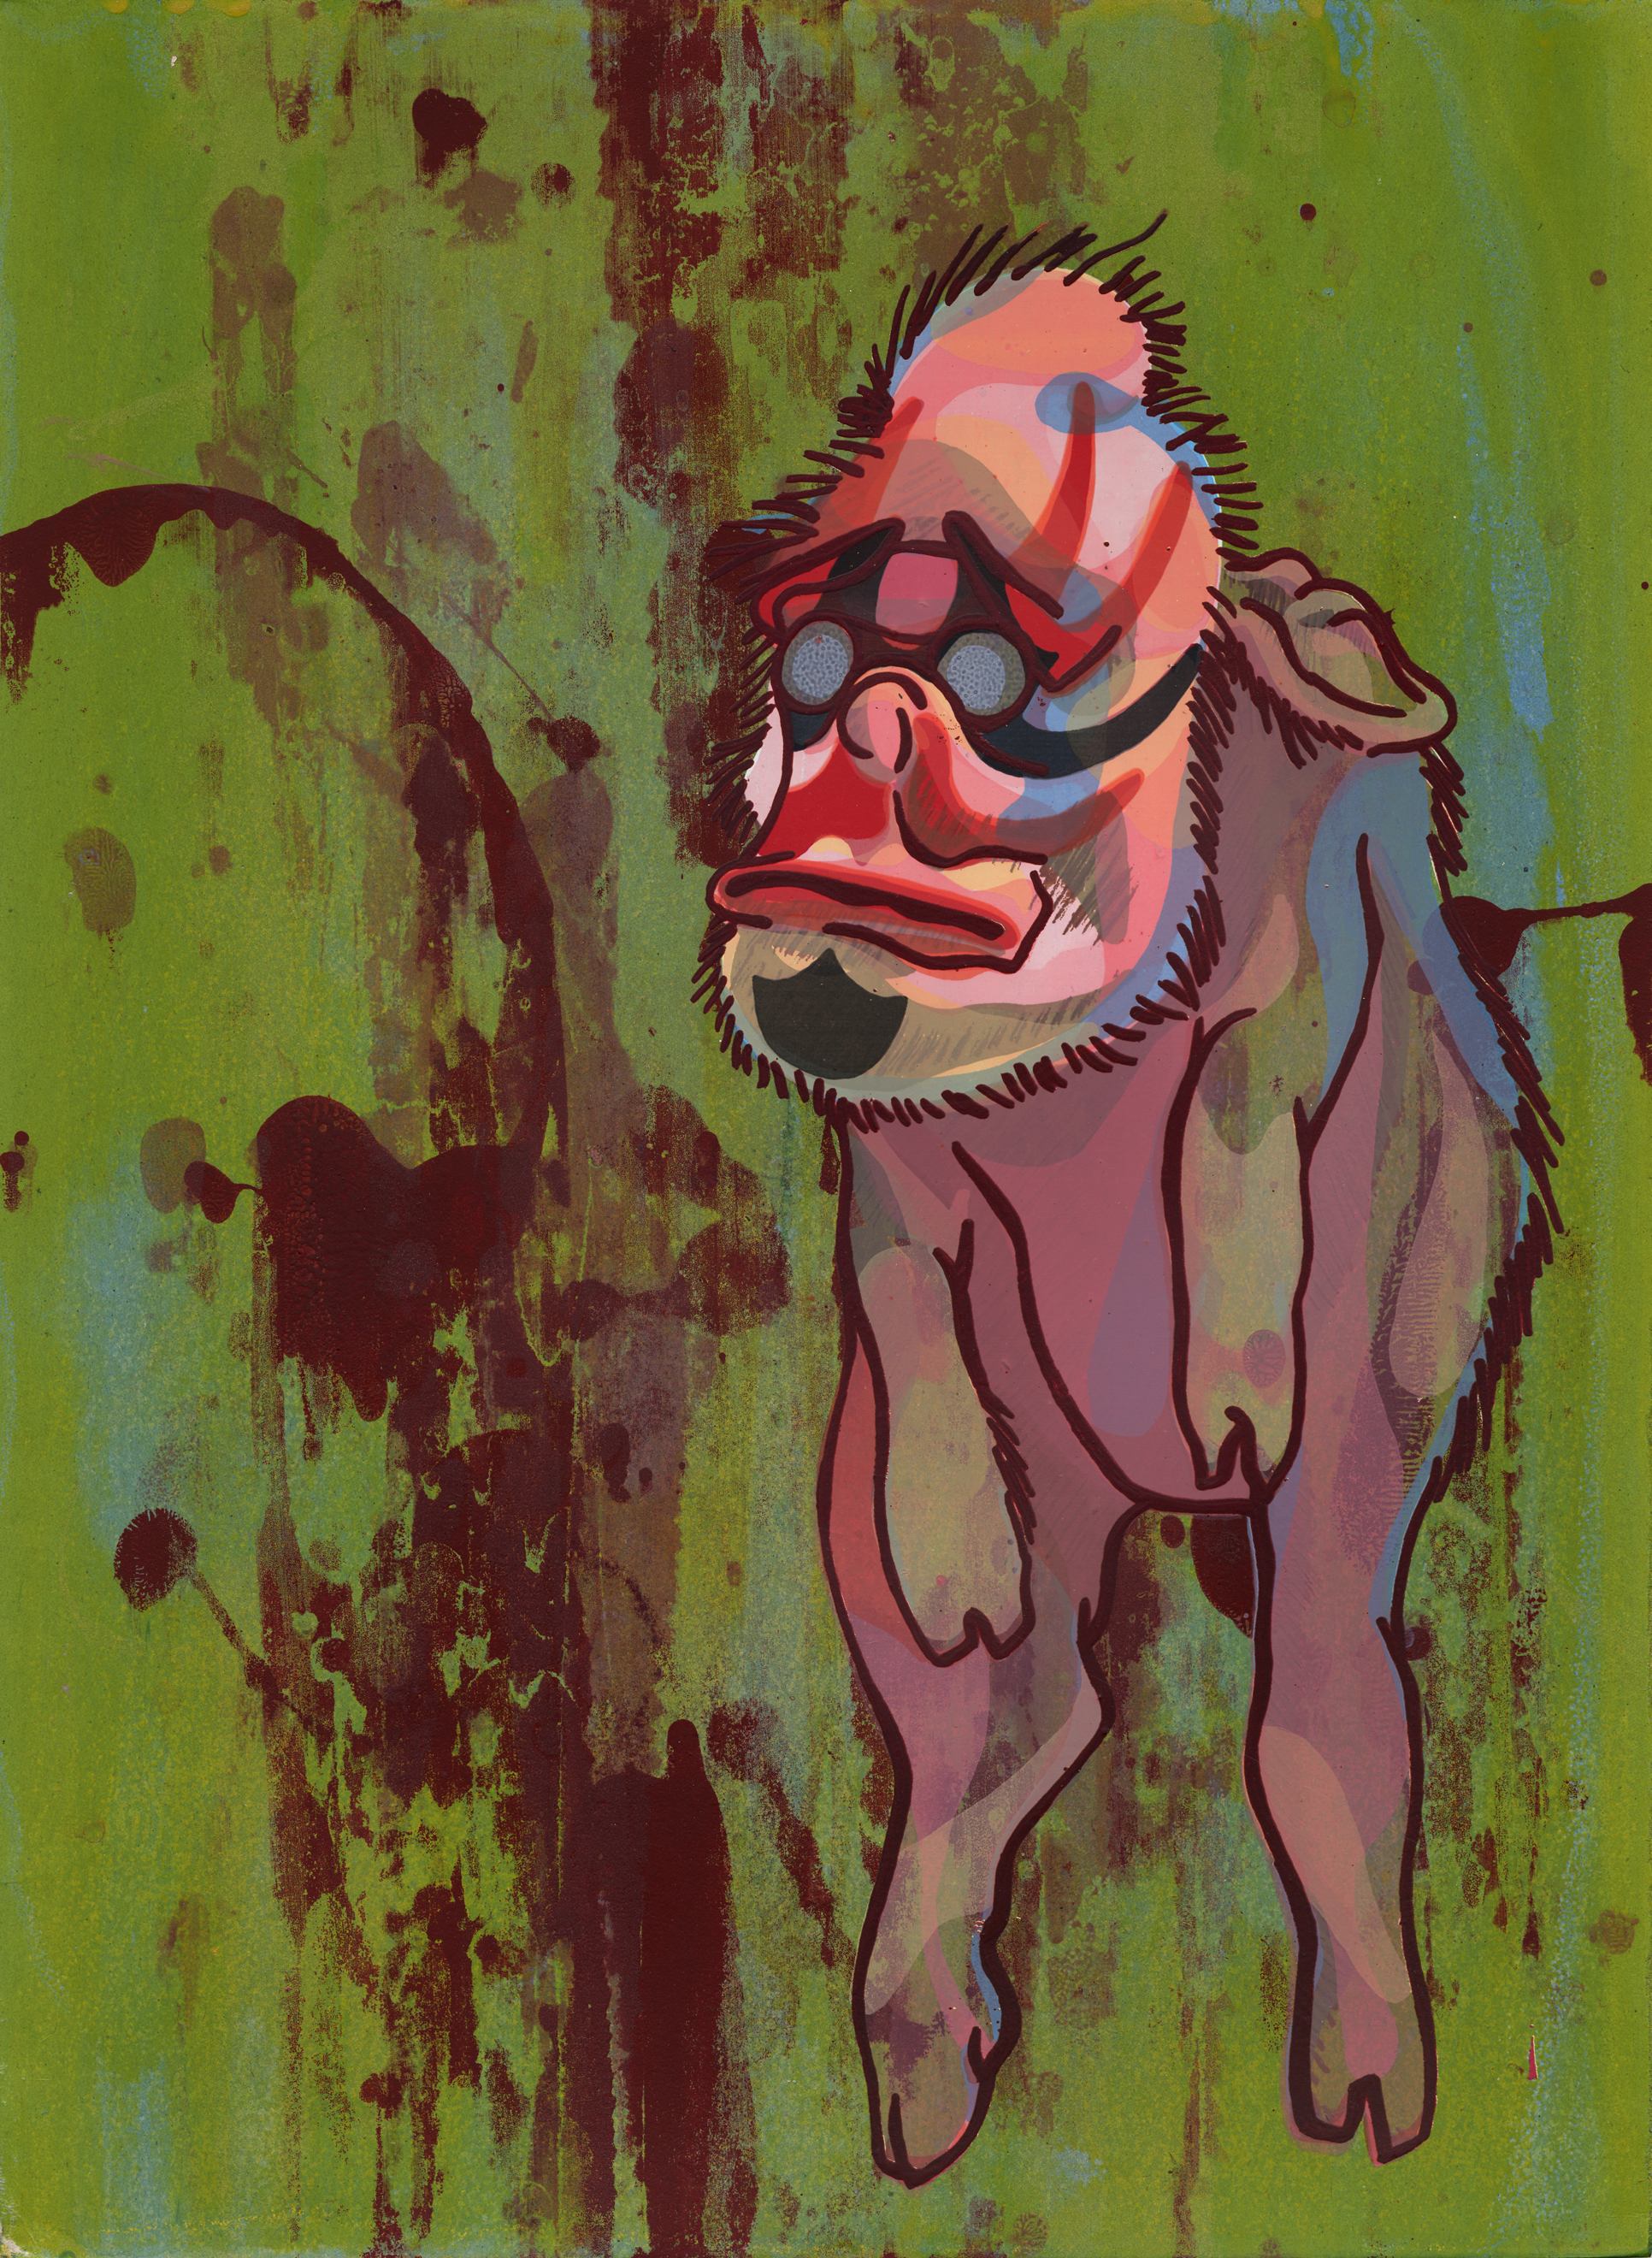 Monkey-Faced Pig (2008)